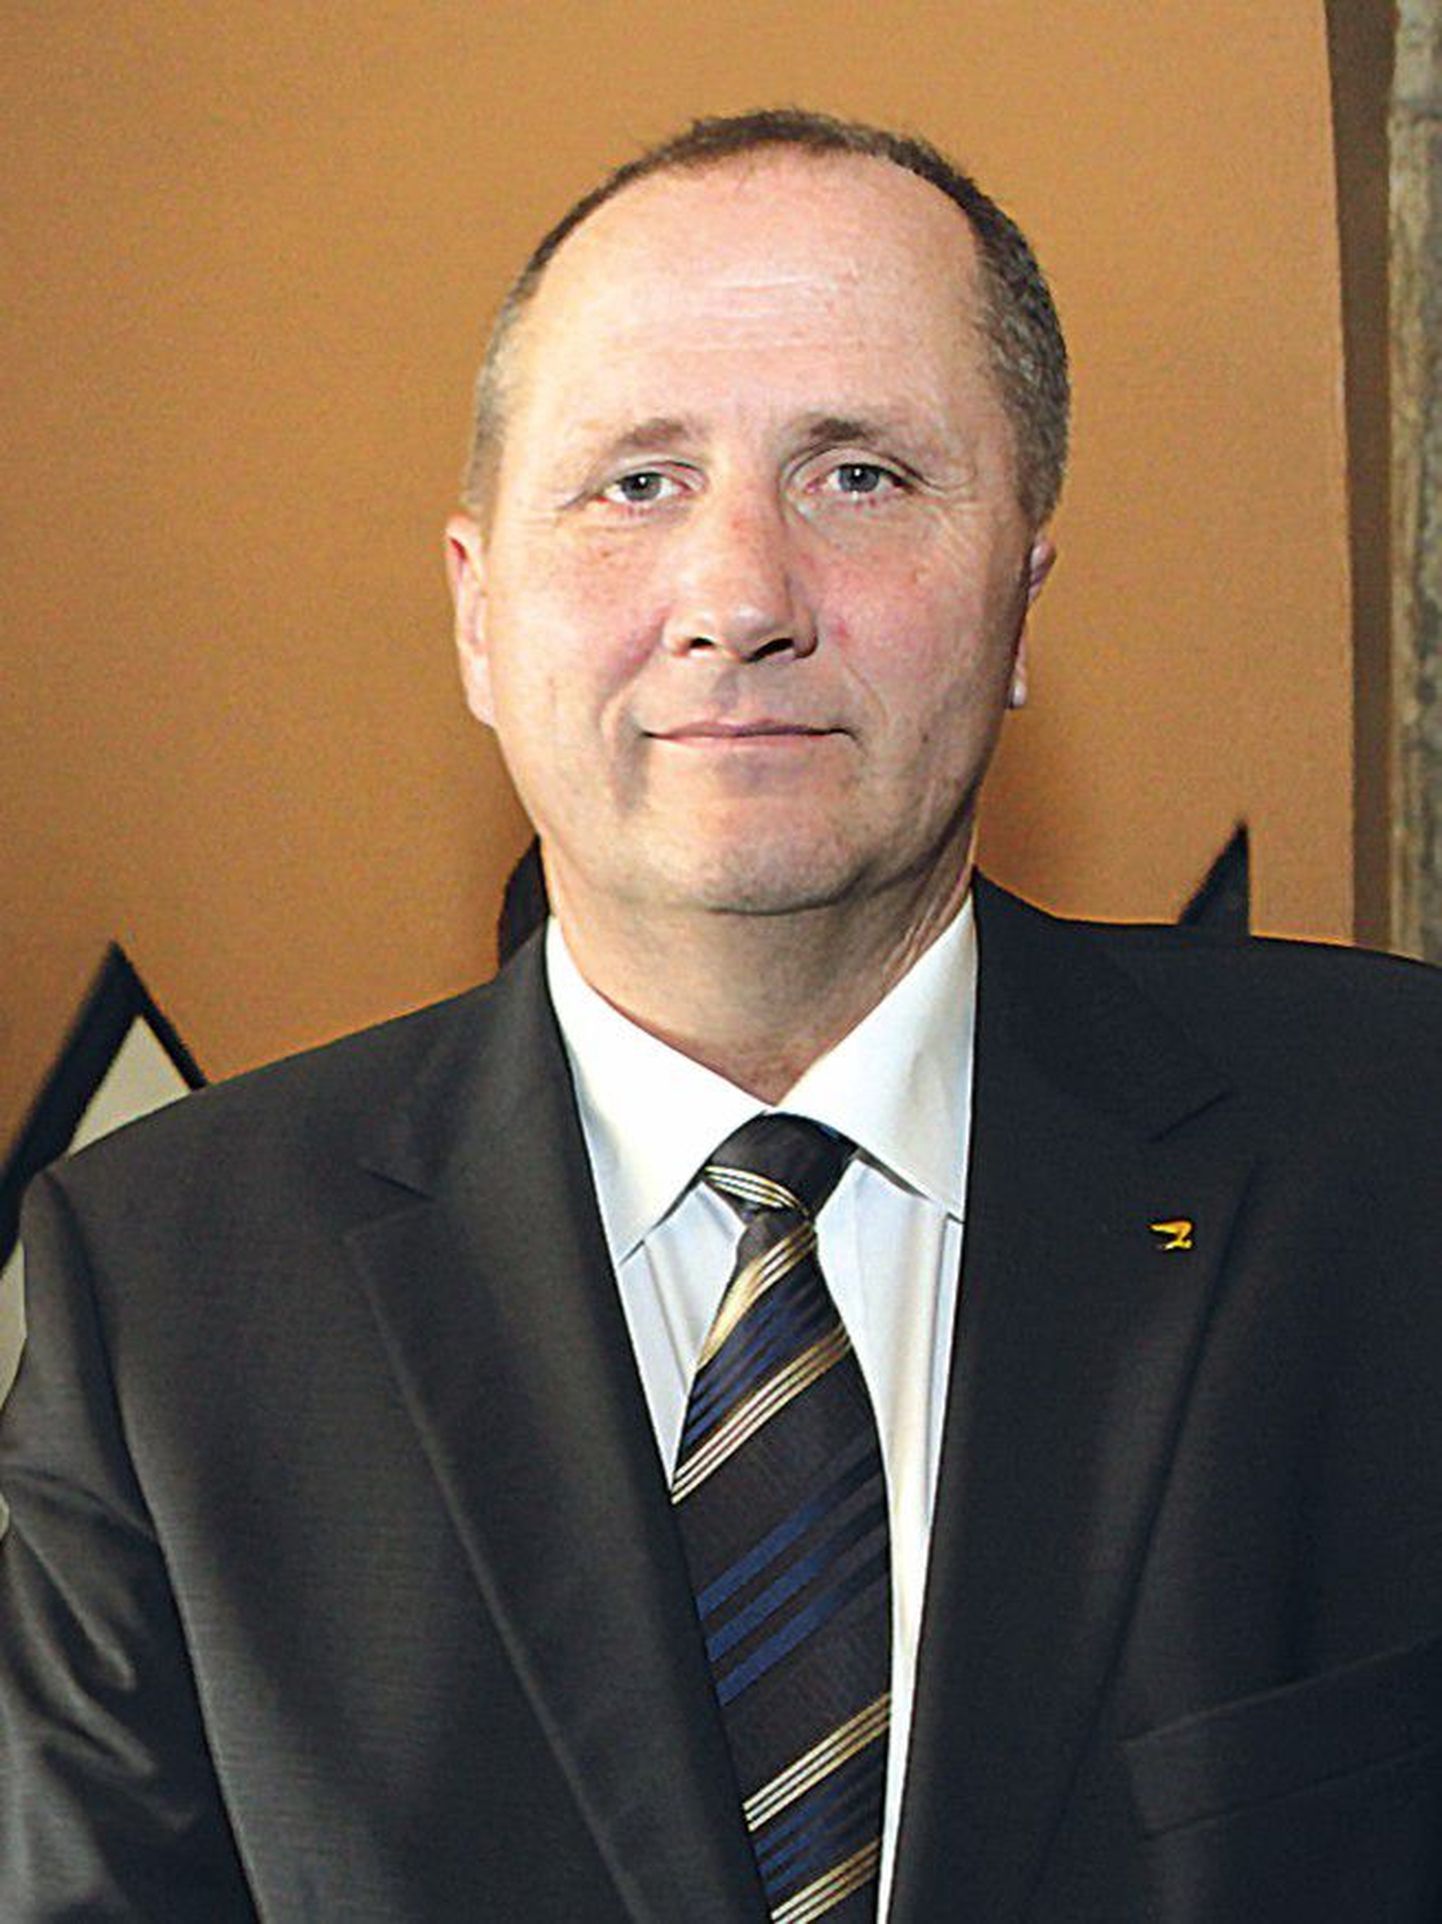 Валдо Рандпере, 
вице-председатель парламентской фракции Партии реформ